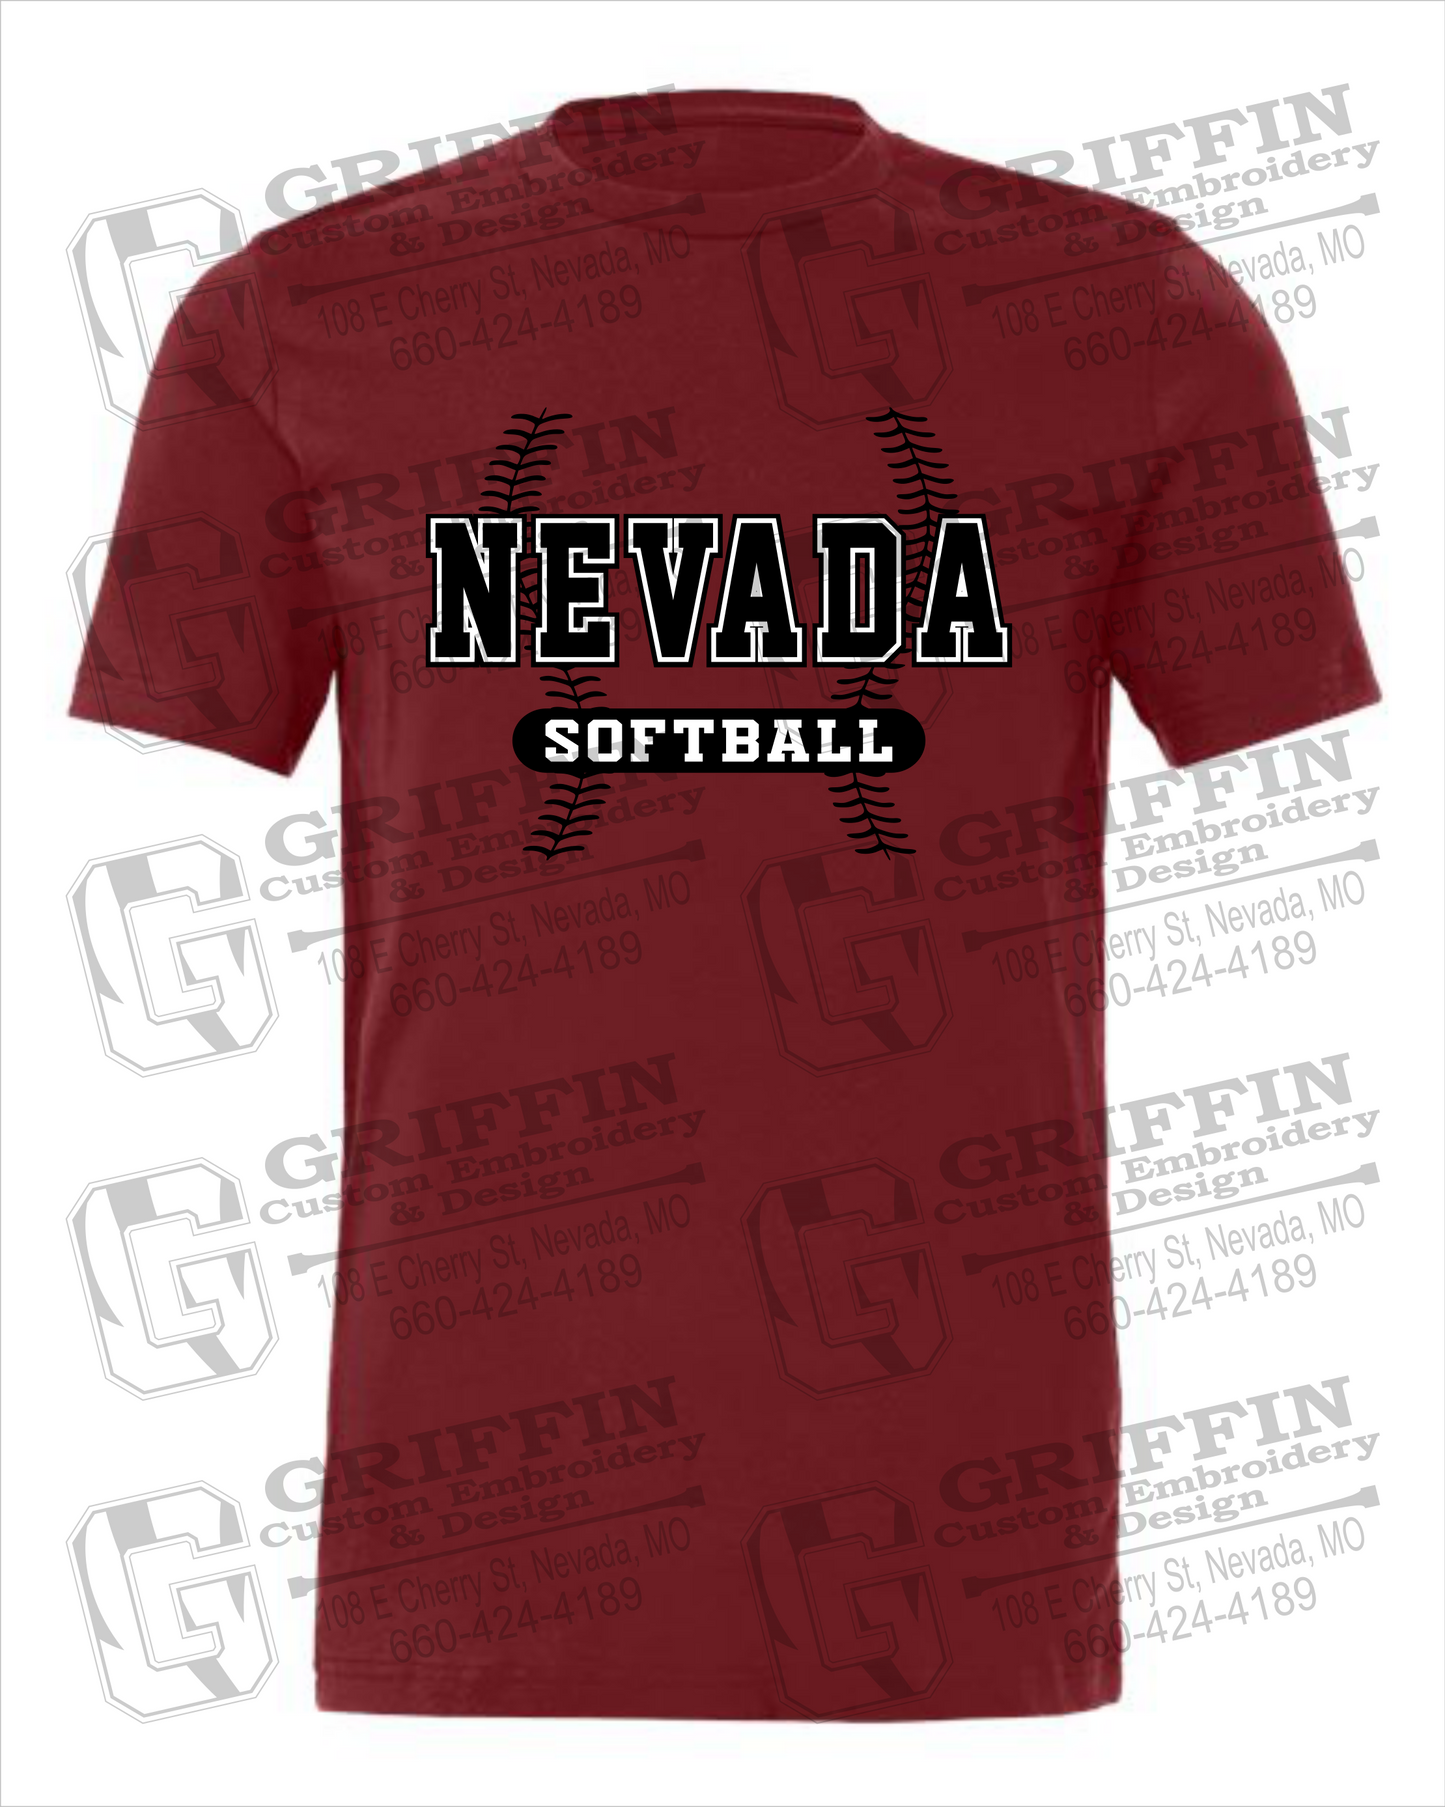 Nevada Tigers 24-E 100% Cotton Short Sleeve T-Shirt - Softball